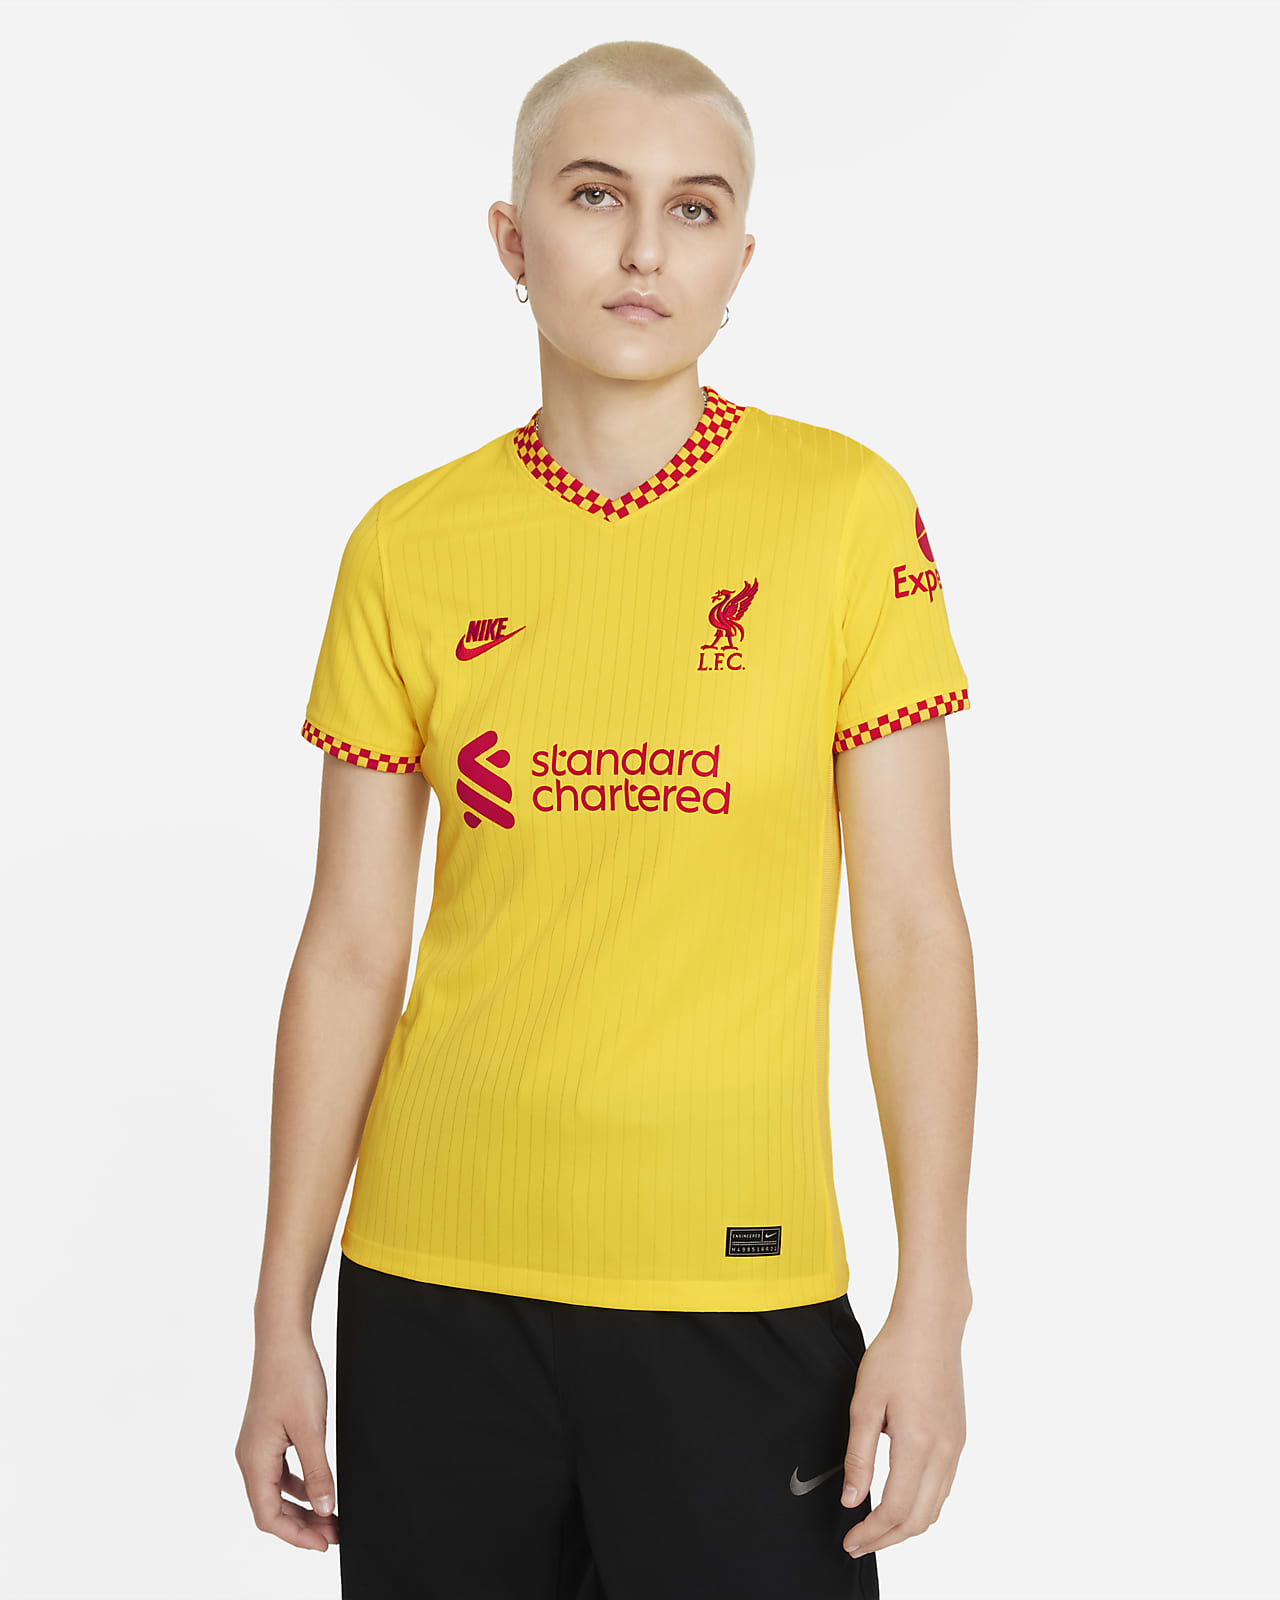 Liverpool F.C. 2021/22 Stadium Third Women's Nike Dri-FIT Football Shirt